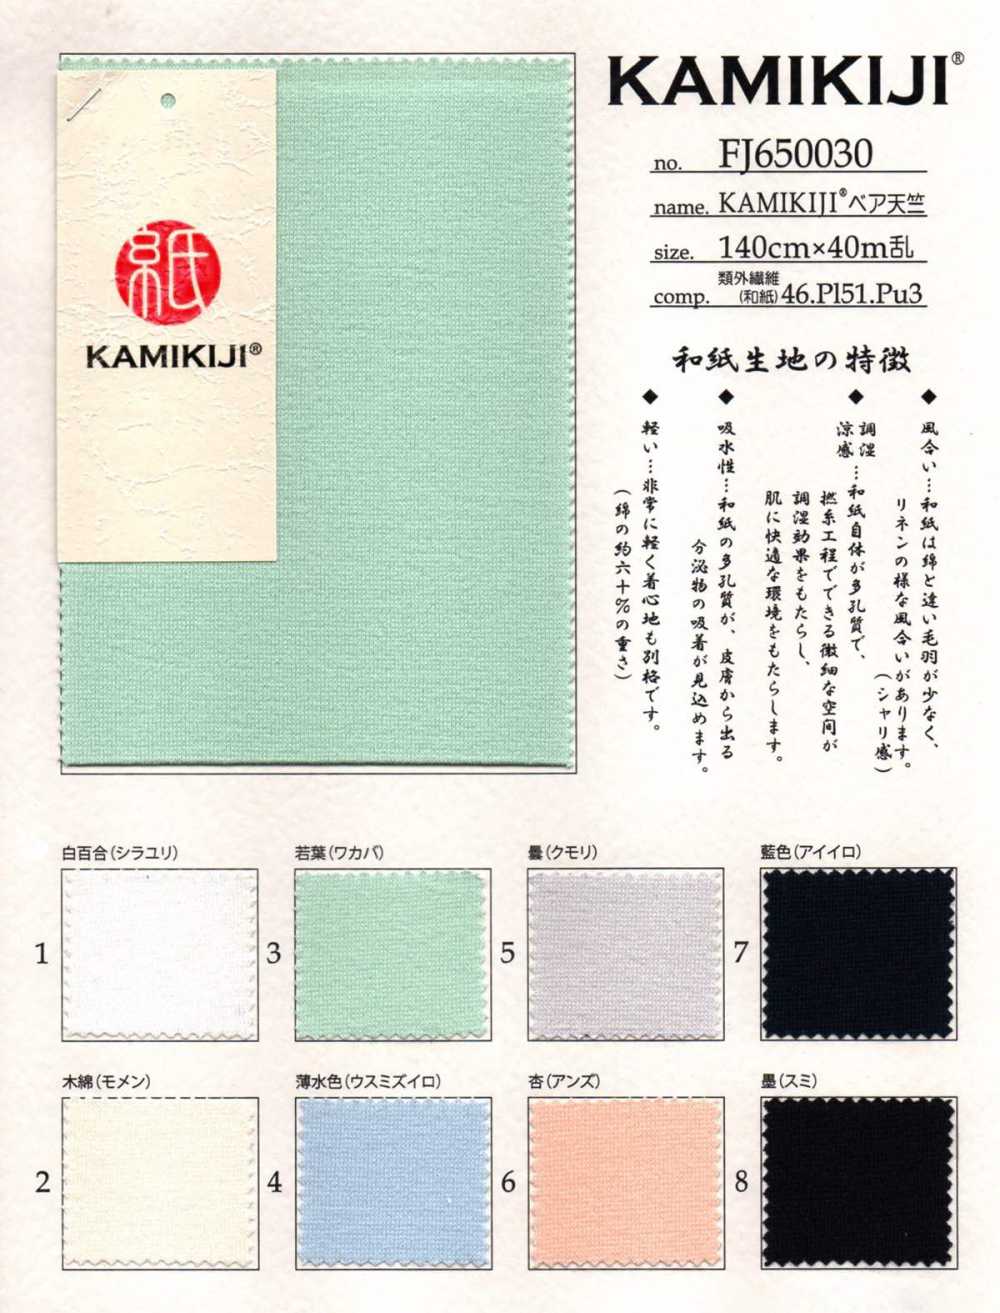 FJ650030 Jersey Desnudo KAMIKIJI®[Fabrica Textil] Fujisaki Textile